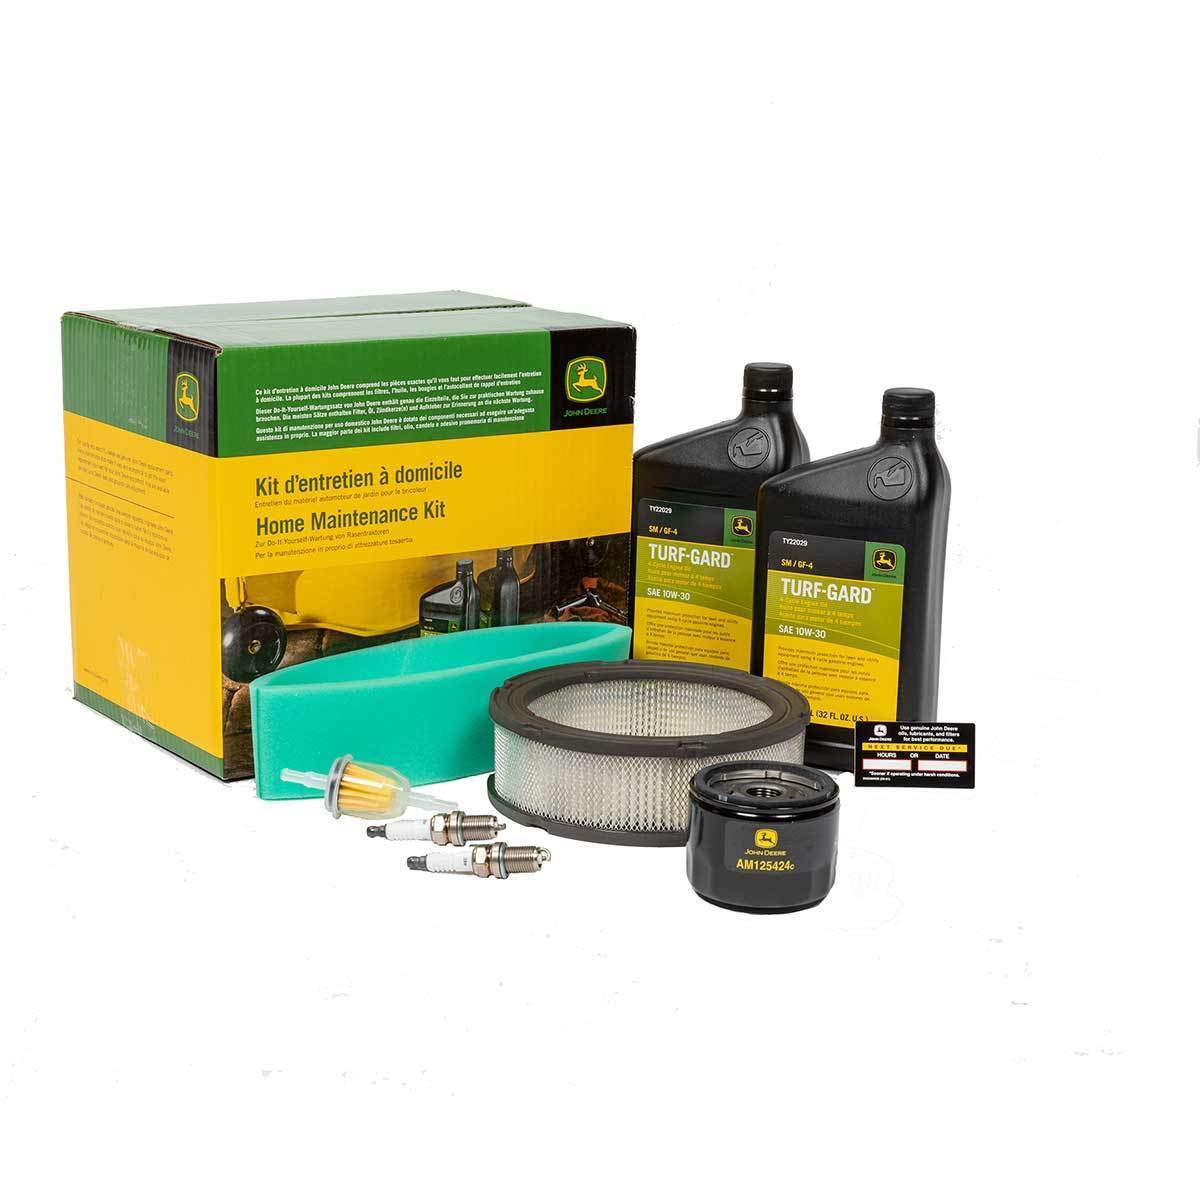 John Deere Home Maintenance Kit LG190 - Green Farm Parts